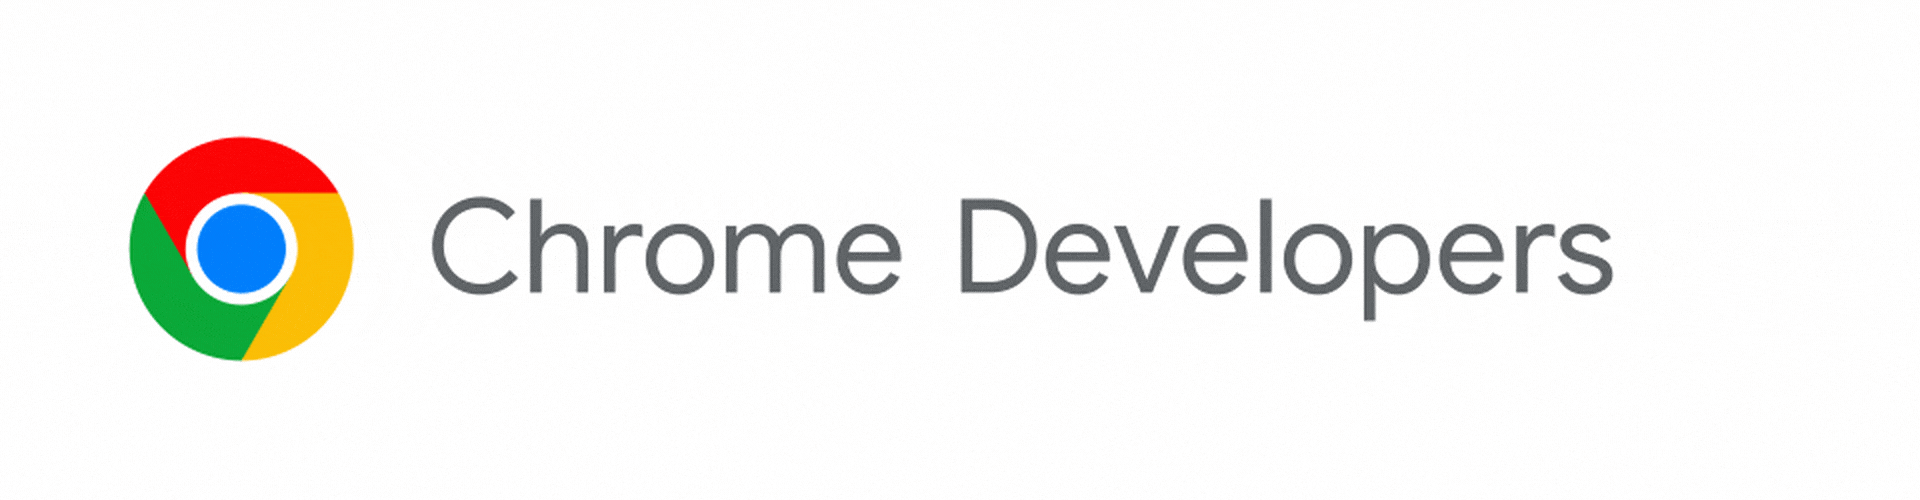 The Chrome Developers logo transforming into Chrome for Developers.